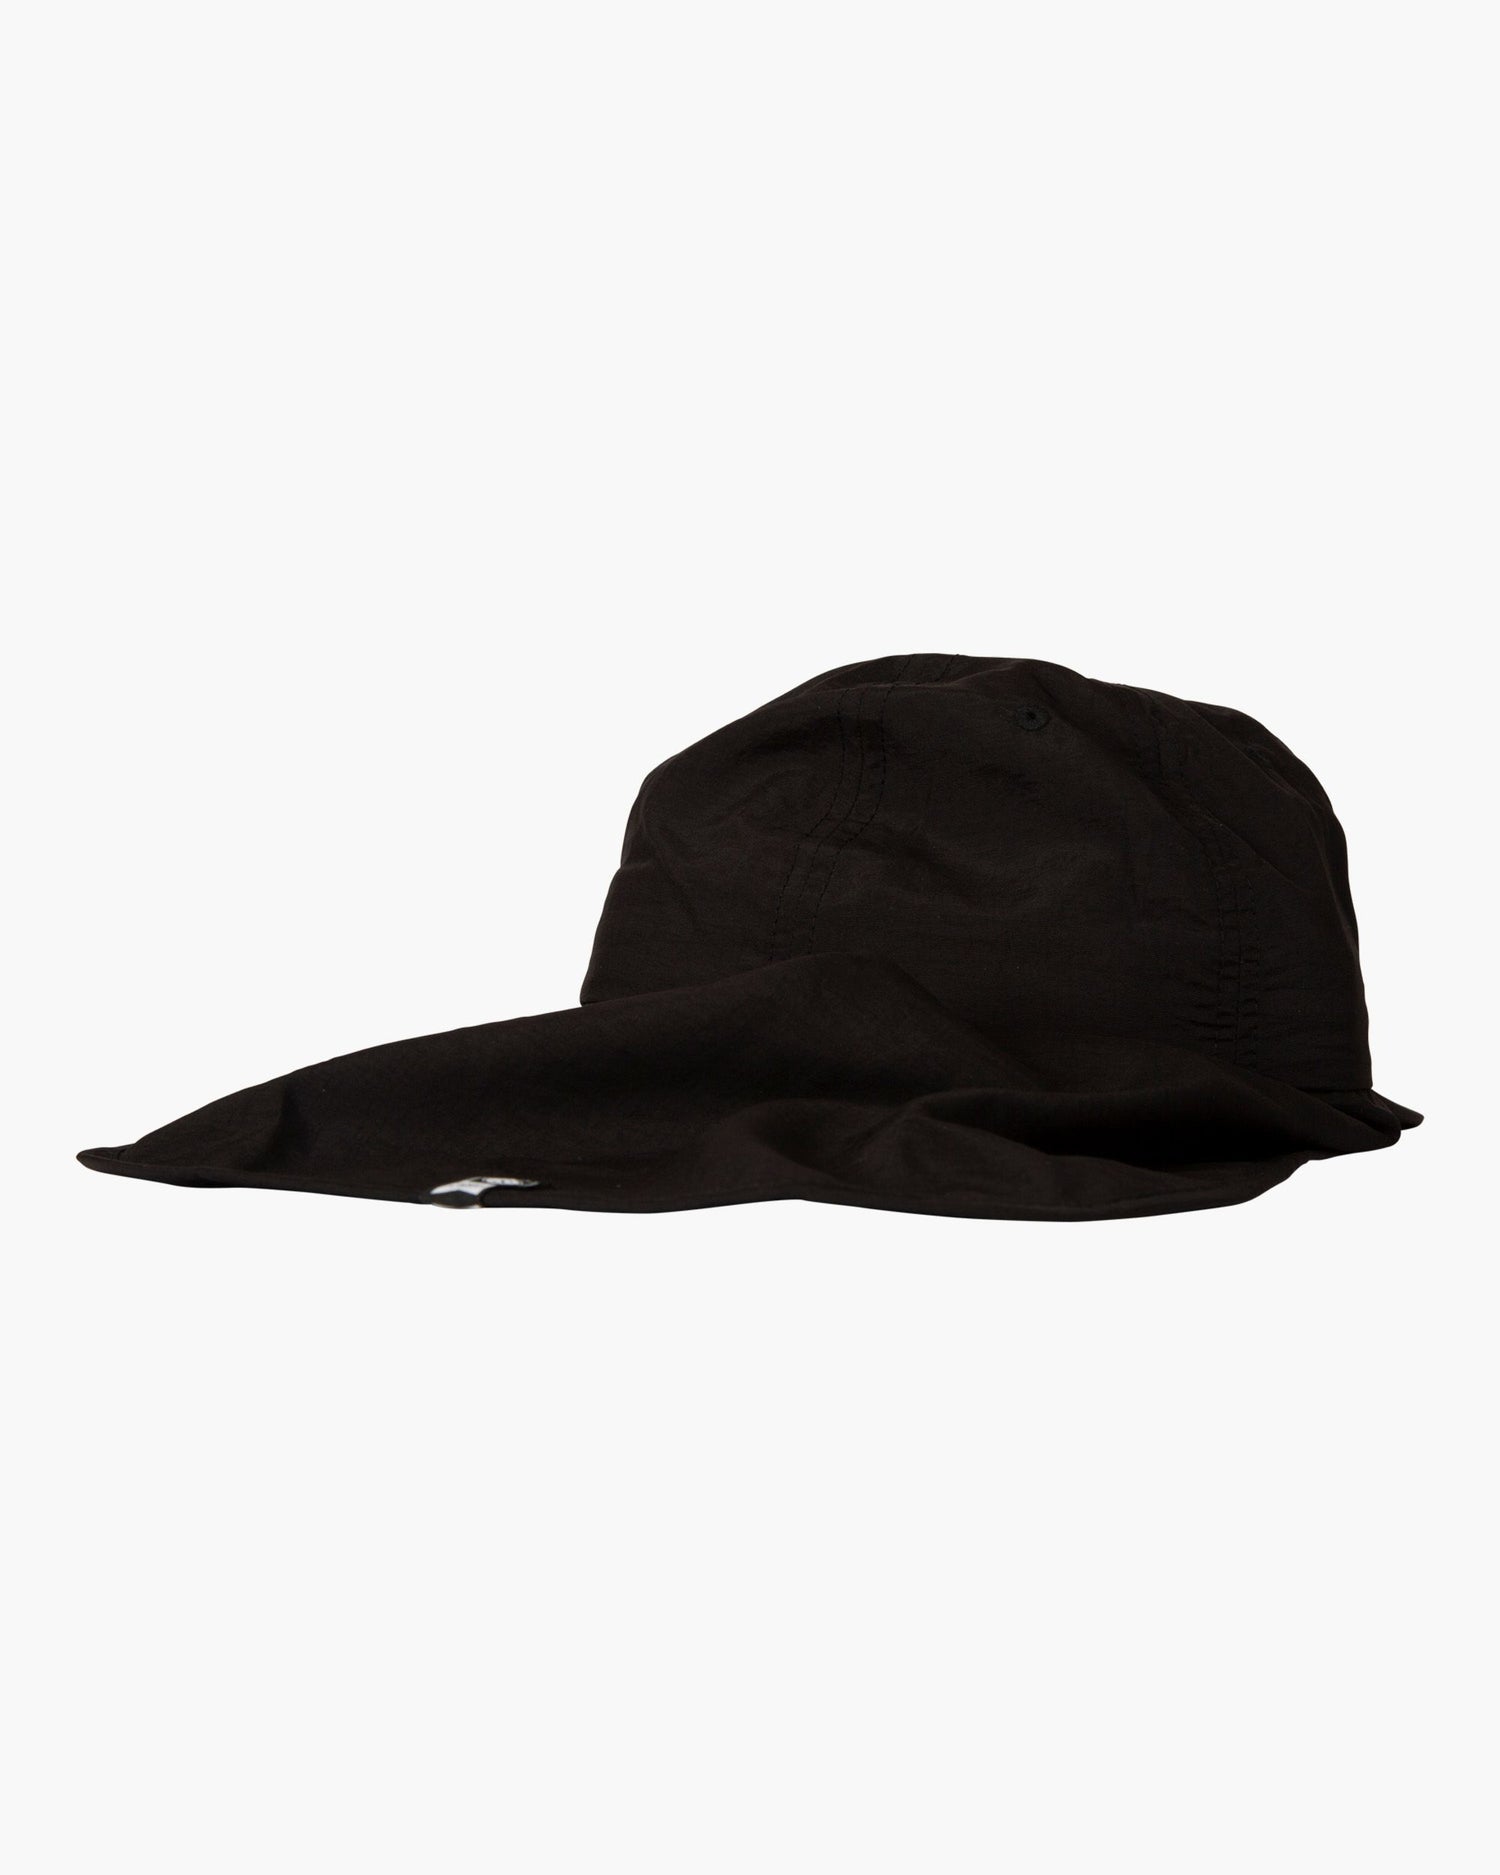 Salty Crew Men's Hats MULLET 5 PANEL SUNHAT in Black